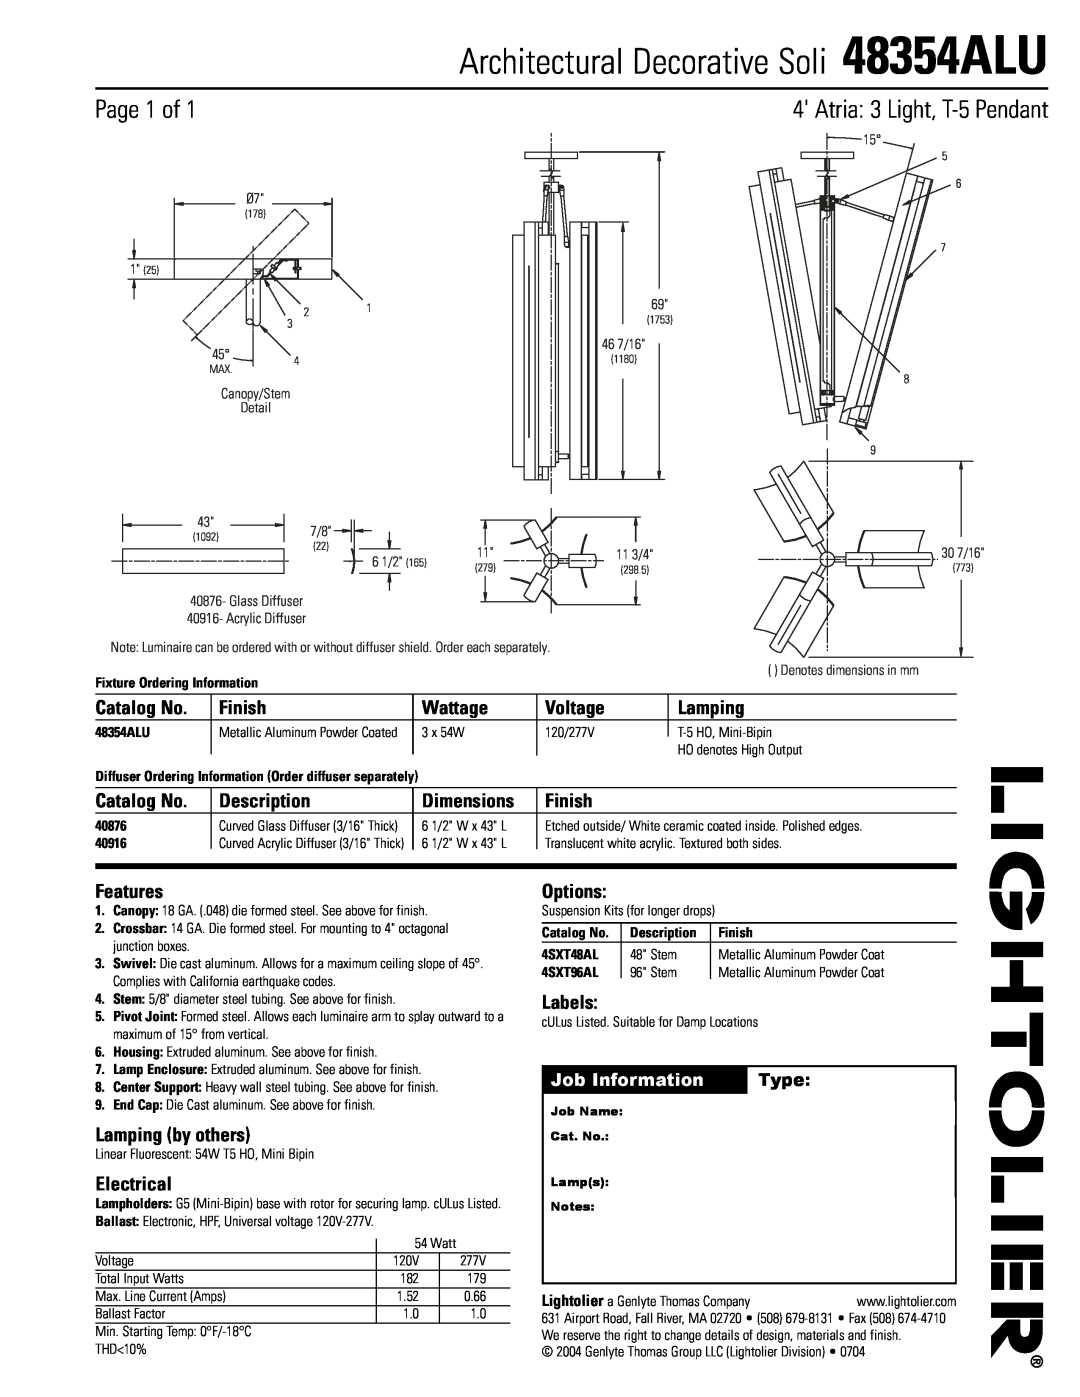 Lightolier dimensions Architectural Decorative Soli 48354ALU, Page 1 of, Atria 3 Light, T-5Pendant 